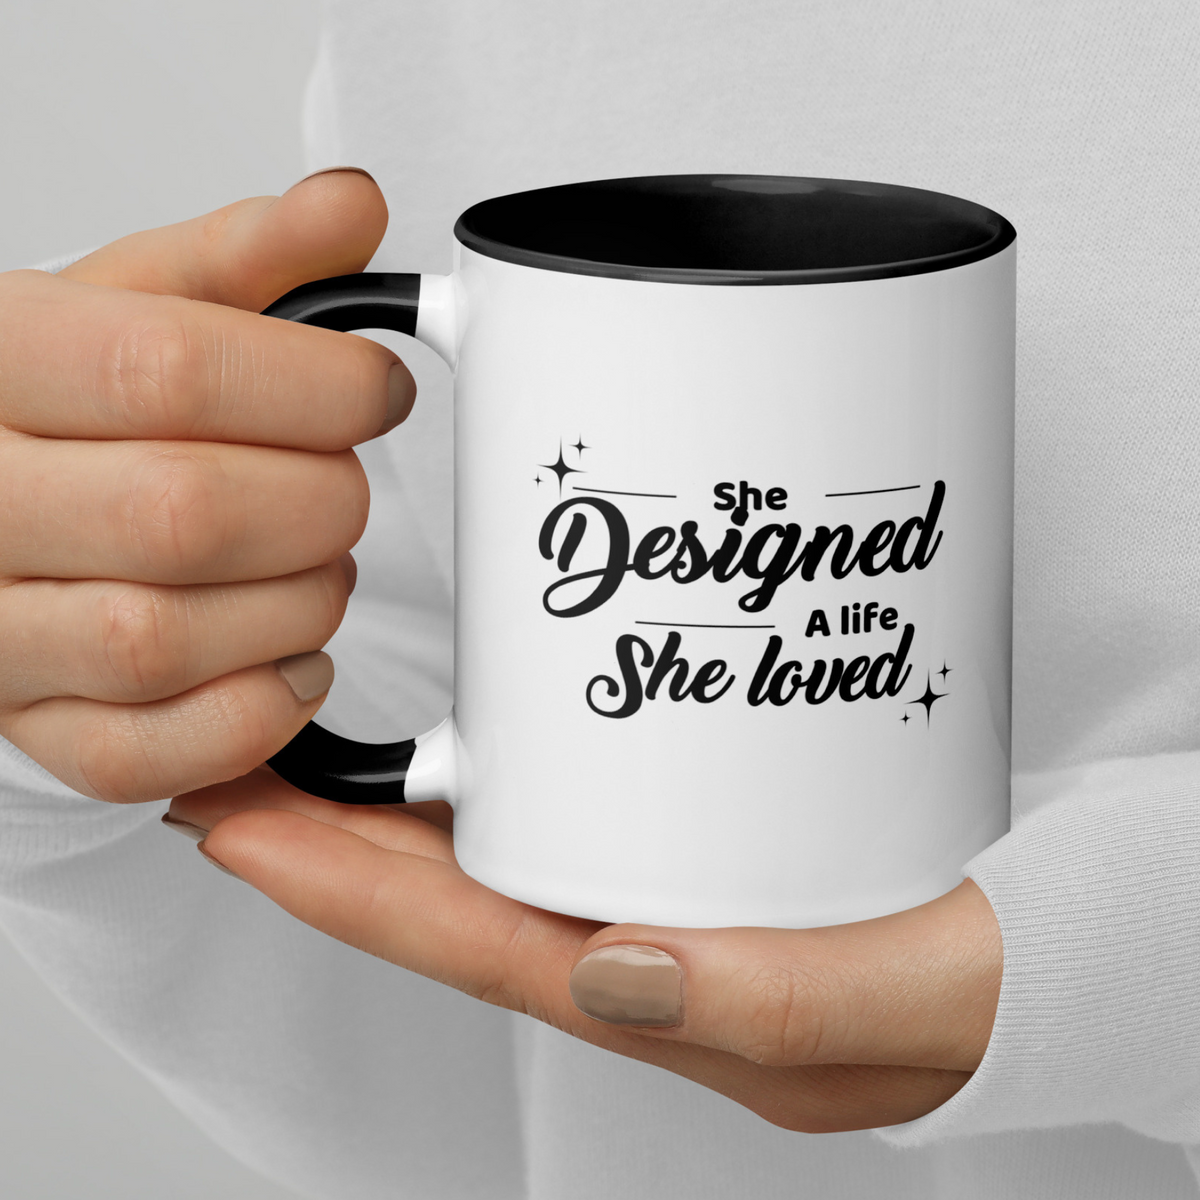 She Designed a Life She Loved mug